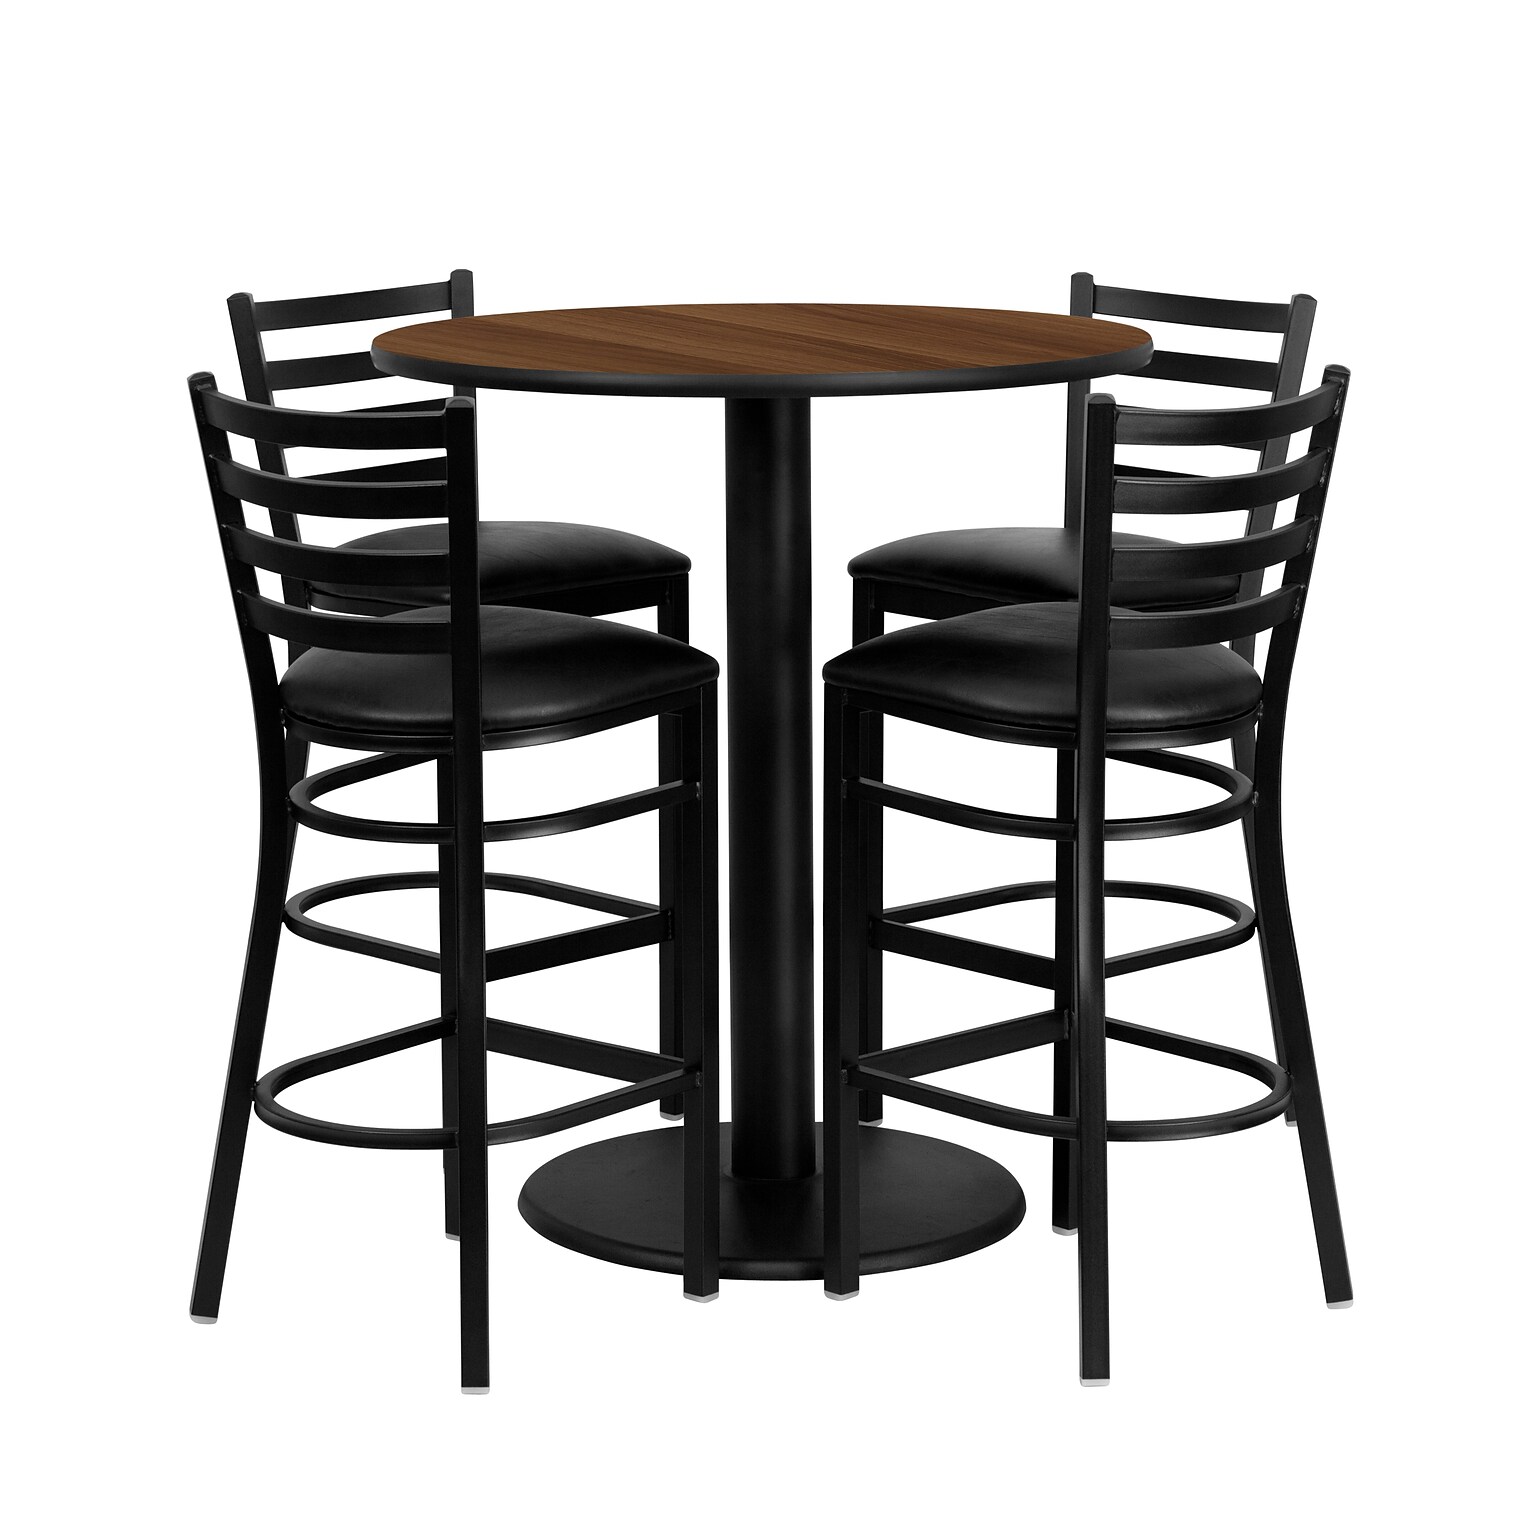 Flash Furniture 36 Round Table Set W/4 Ladder Back Metal Bar Stools, Walnut /Black (MD0011)